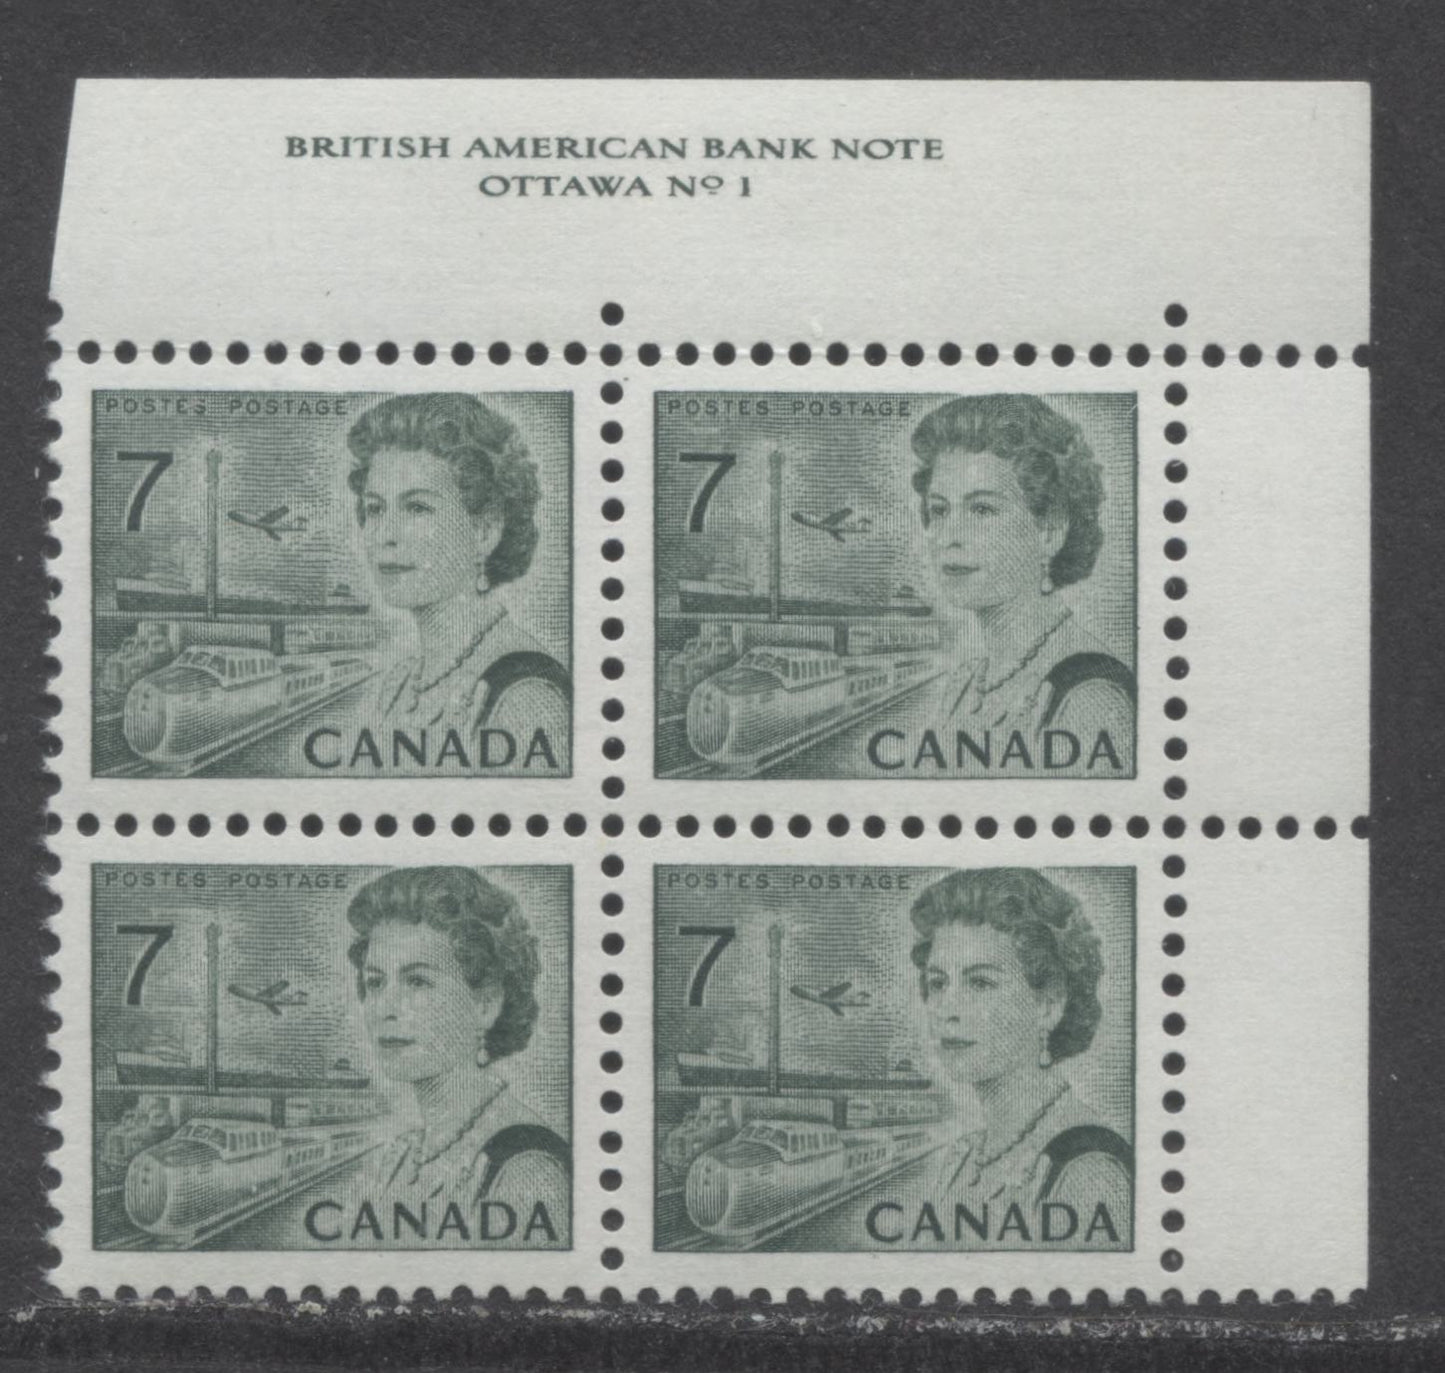 Lot 73 Canada #543 7c Dark Green Queen Elizabeth II, 1967-1973 Centennial Issue, A VFNH UR Plate 1 Block Of 4 On Off-White DF1 Paper With Smooth Dex Gum, Dark Green On Ivory Under UV